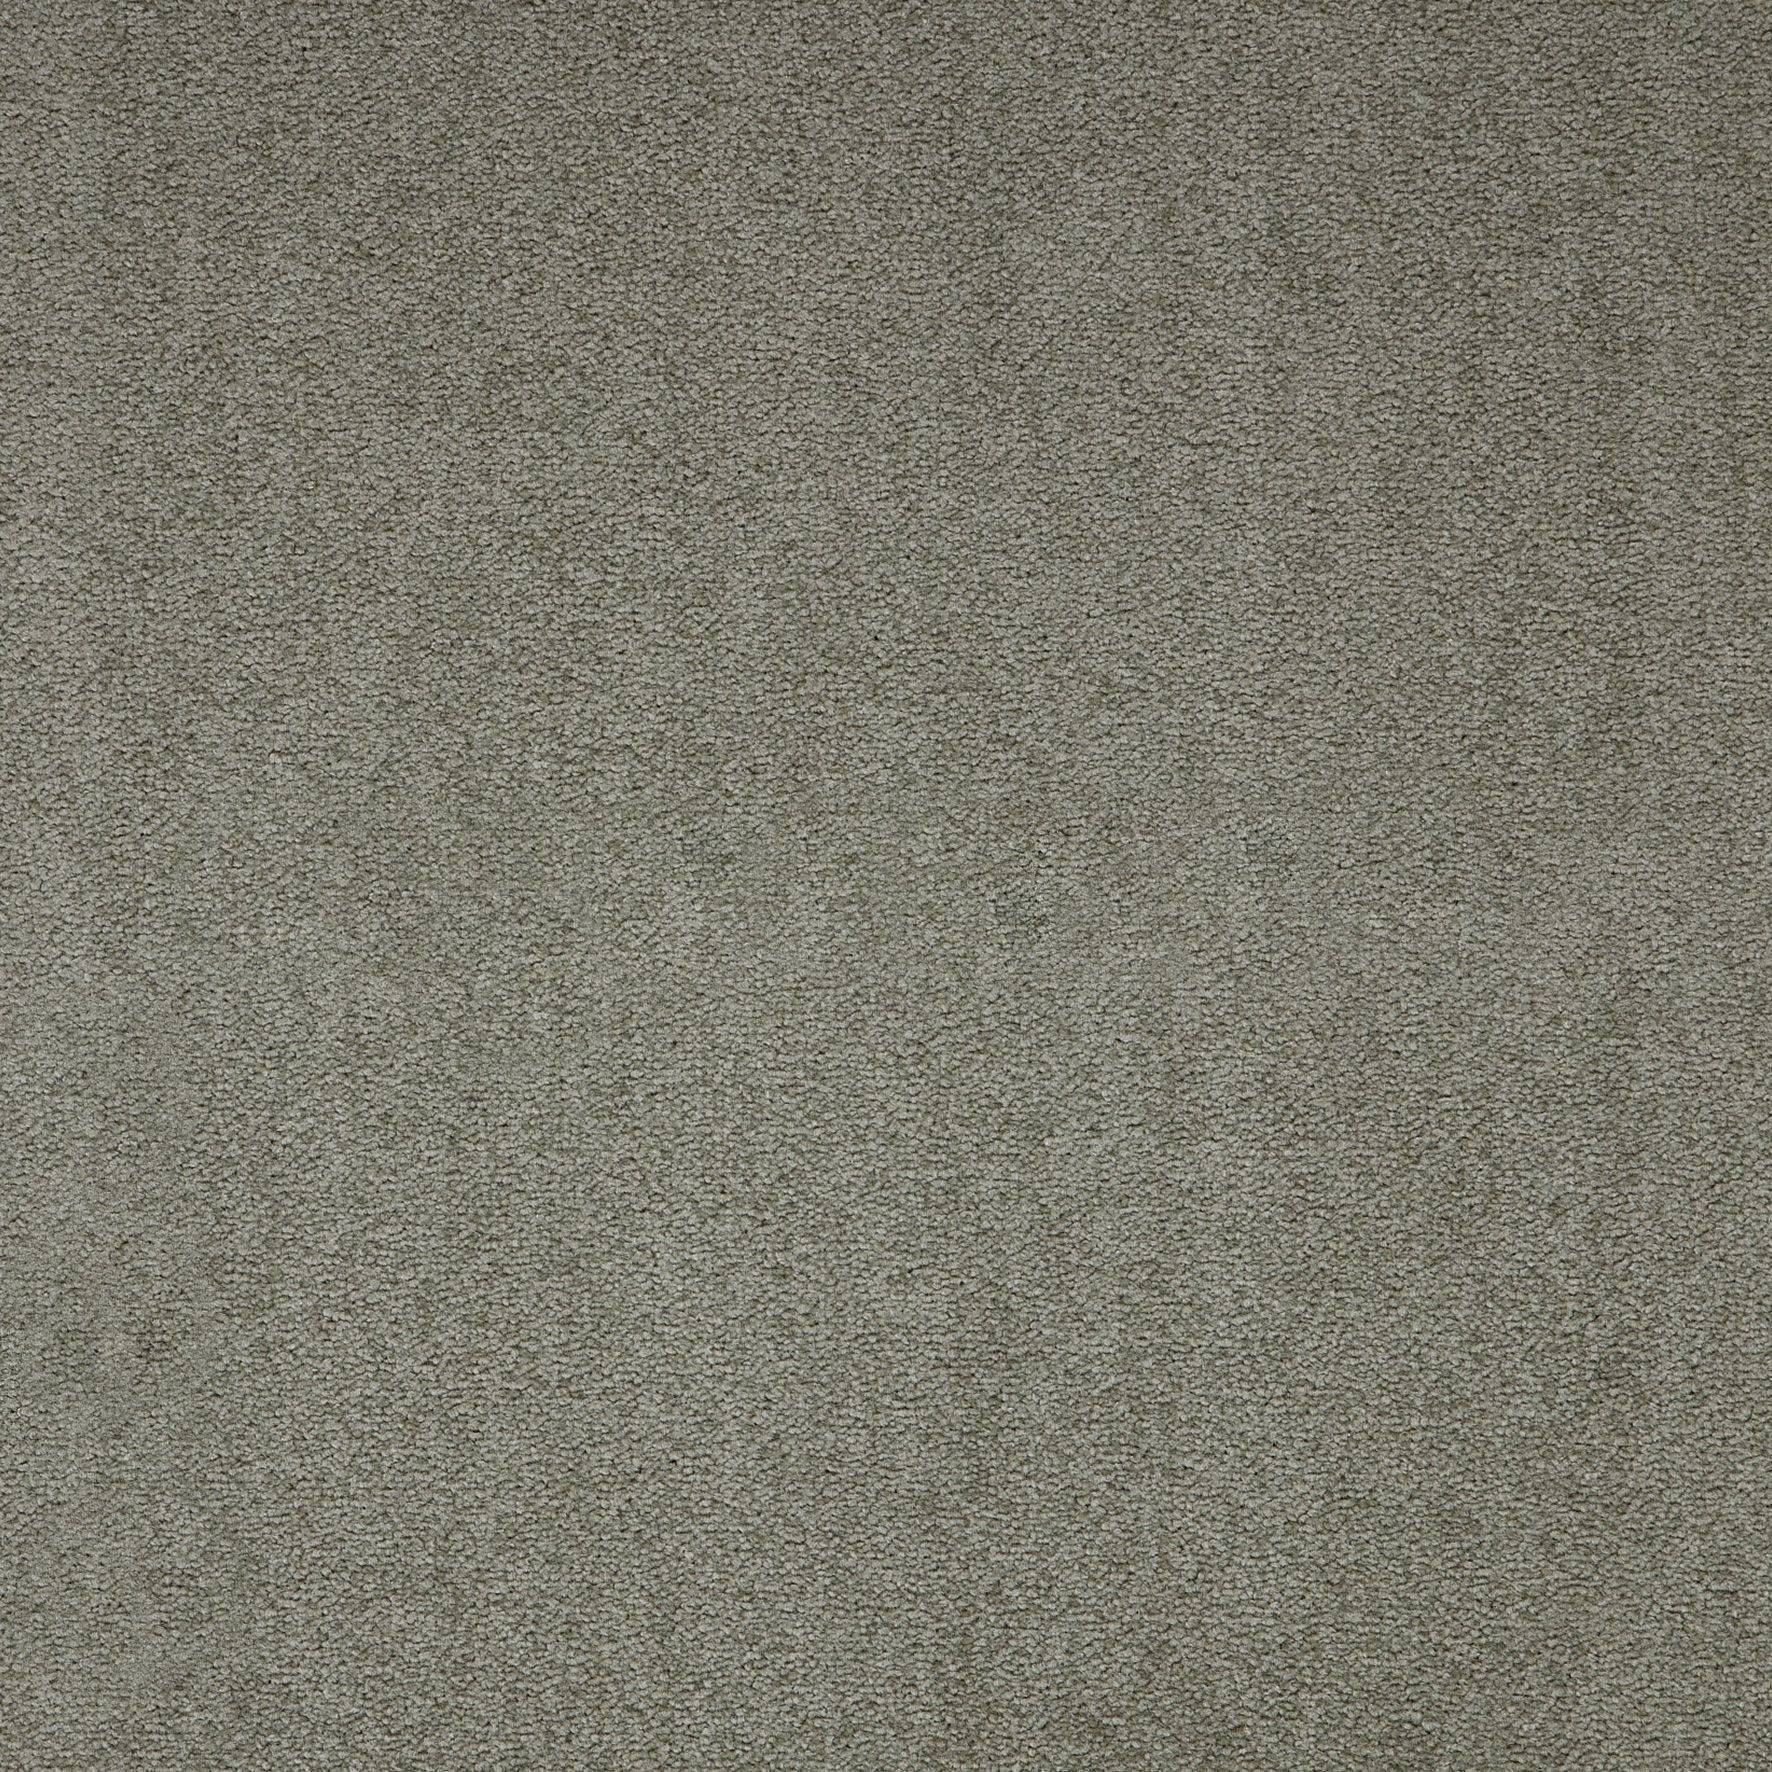 Paragon Maestro Carpet Tile Indian Ivy